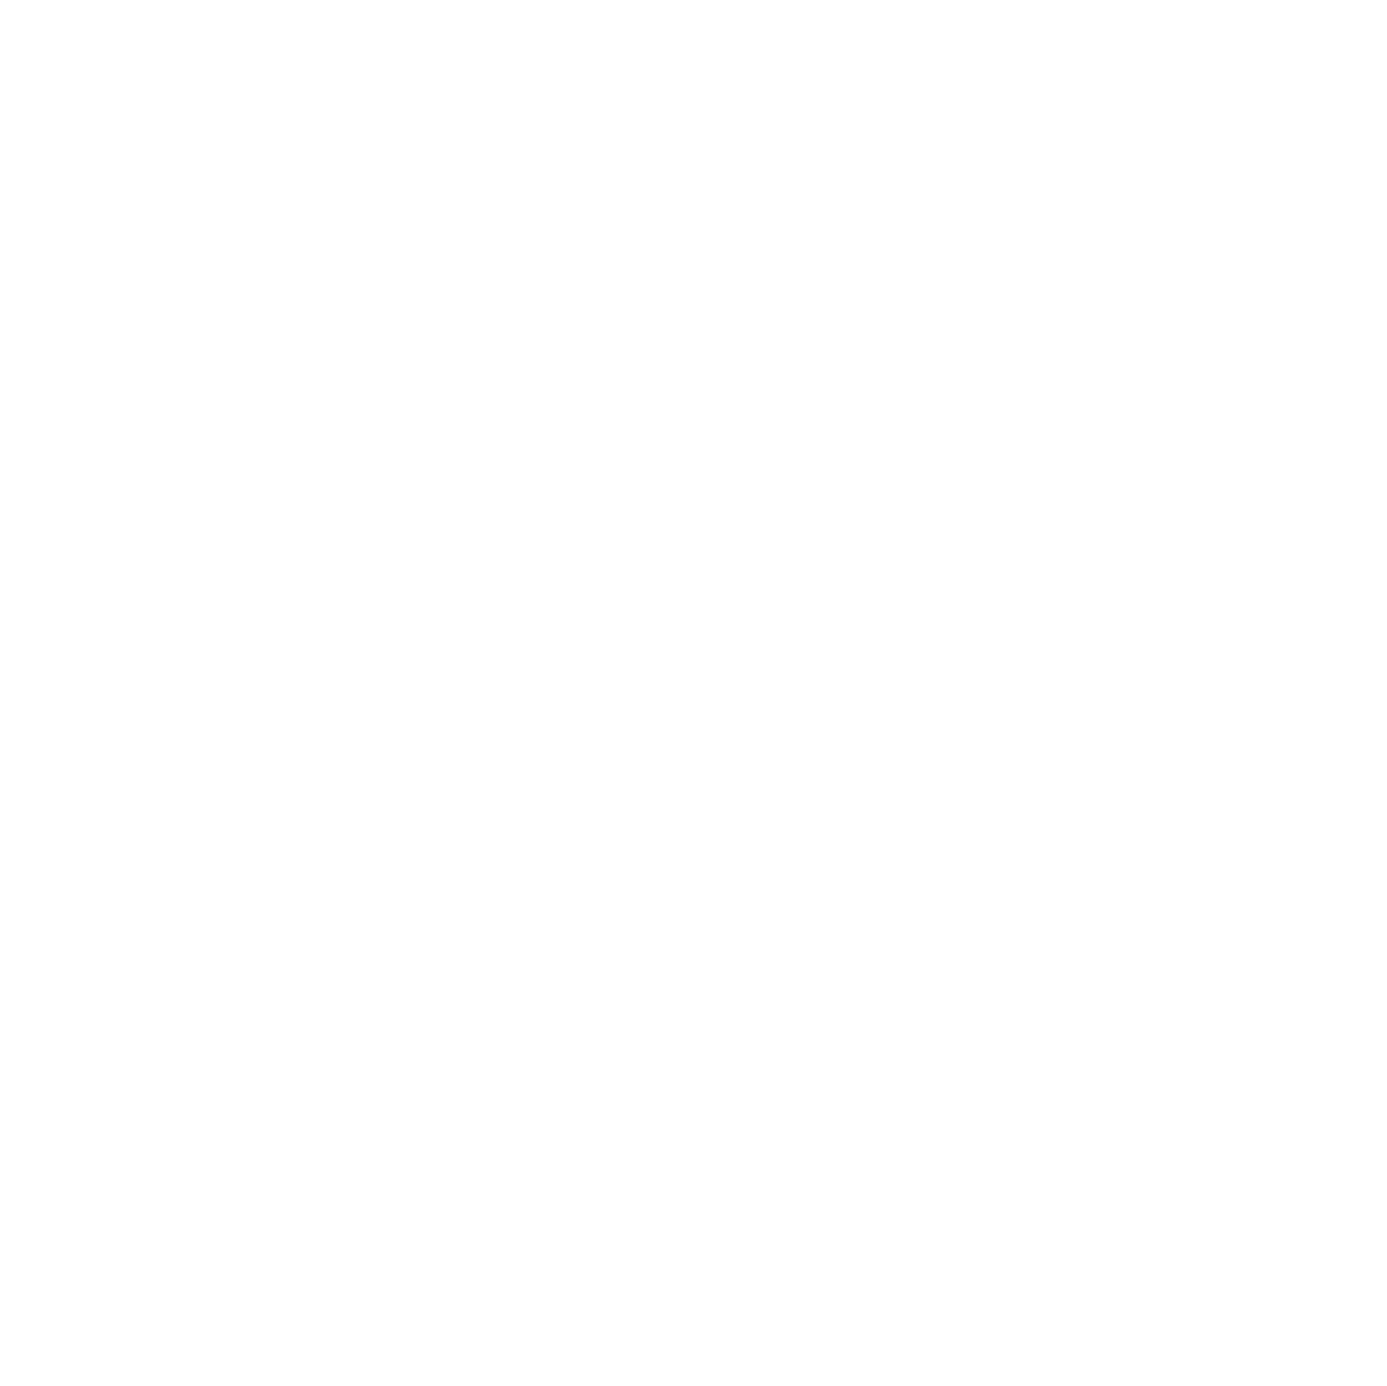 https://www.saastock.com/wp-content/uploads/2020/05/lakestar2.png